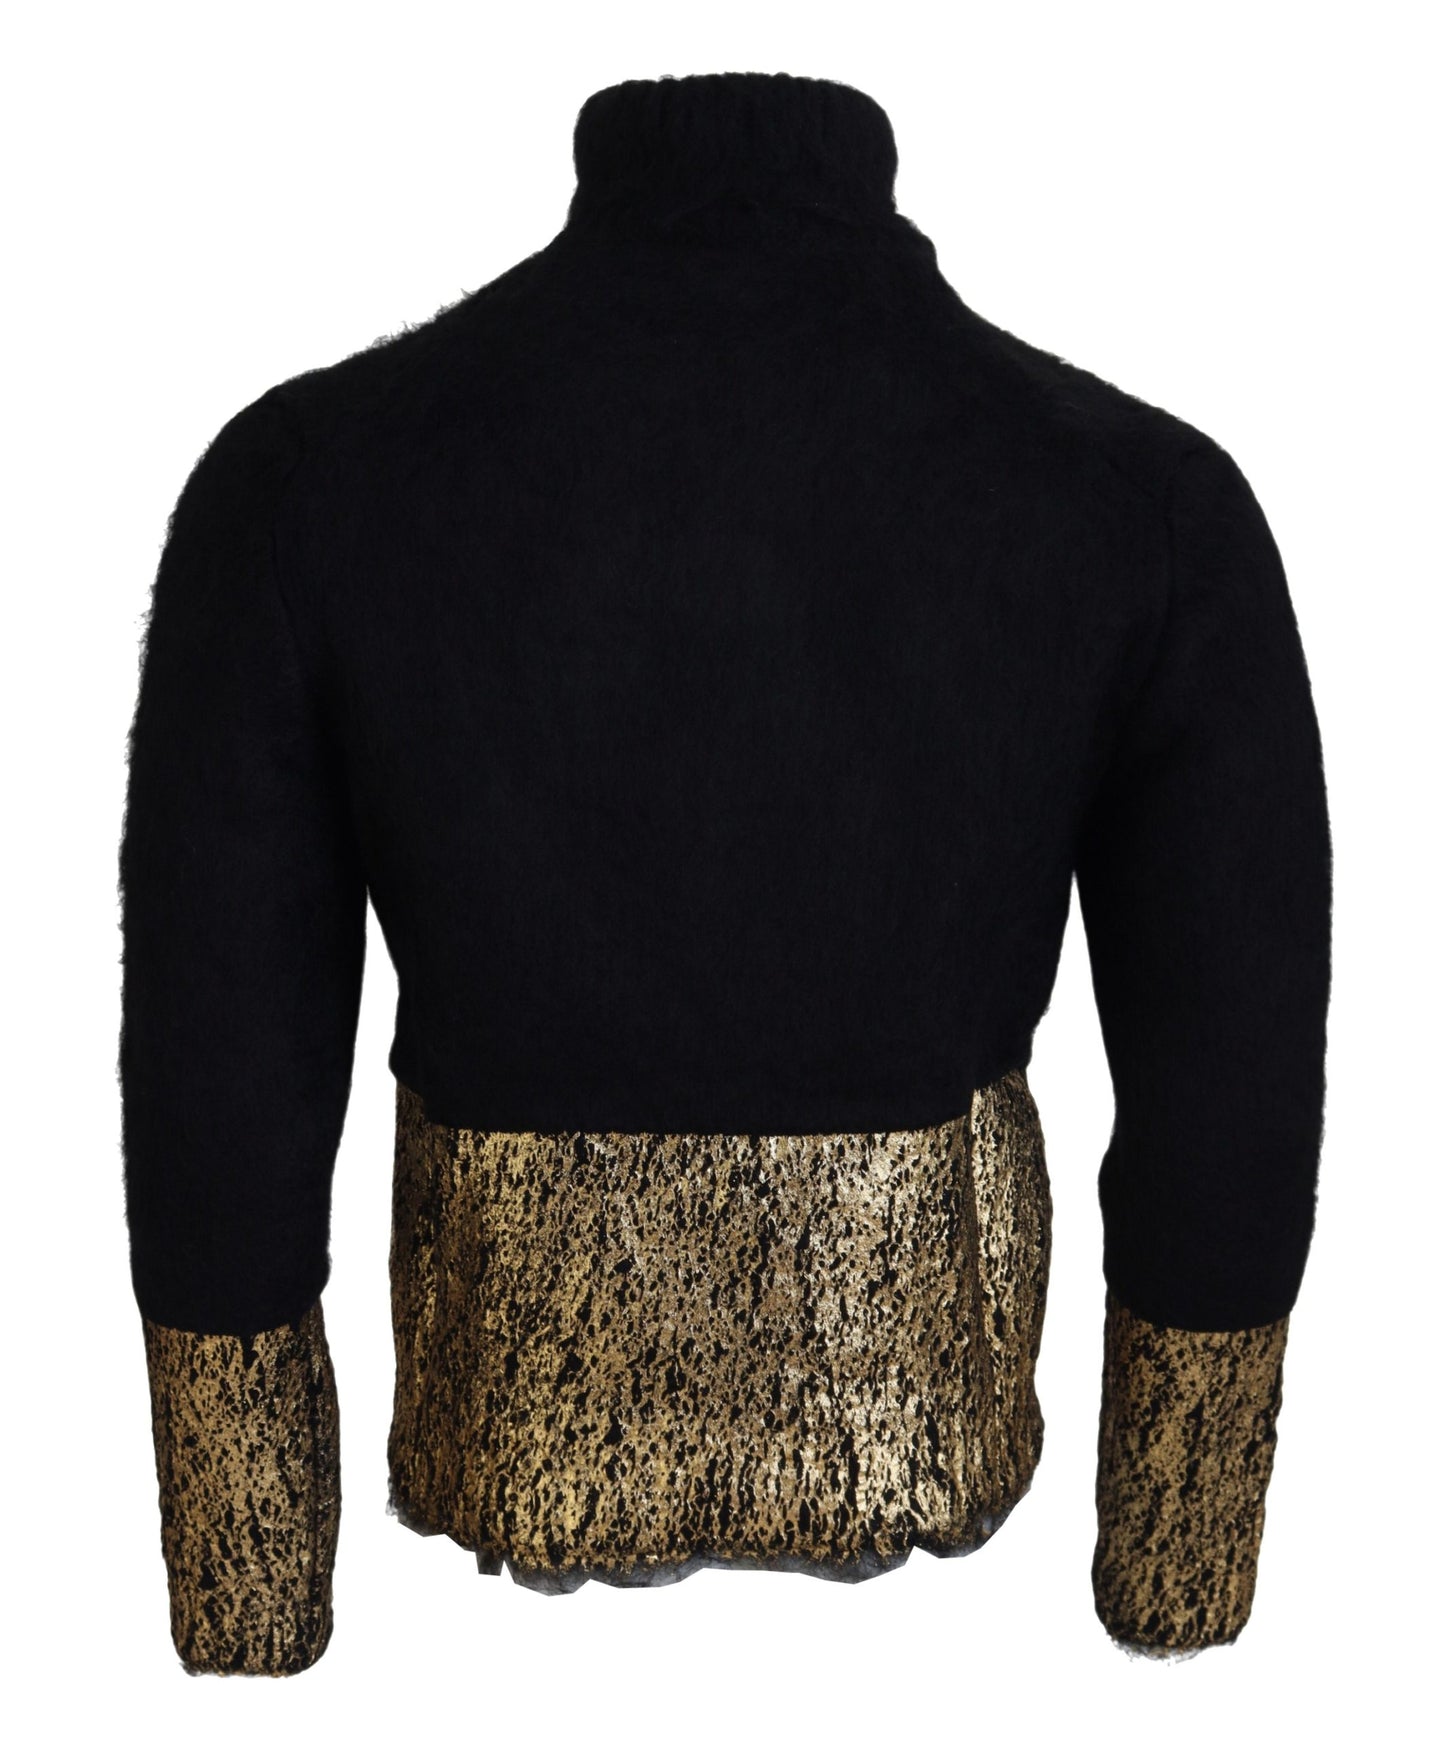 Stunning Black and Gold Crewneck Sweater